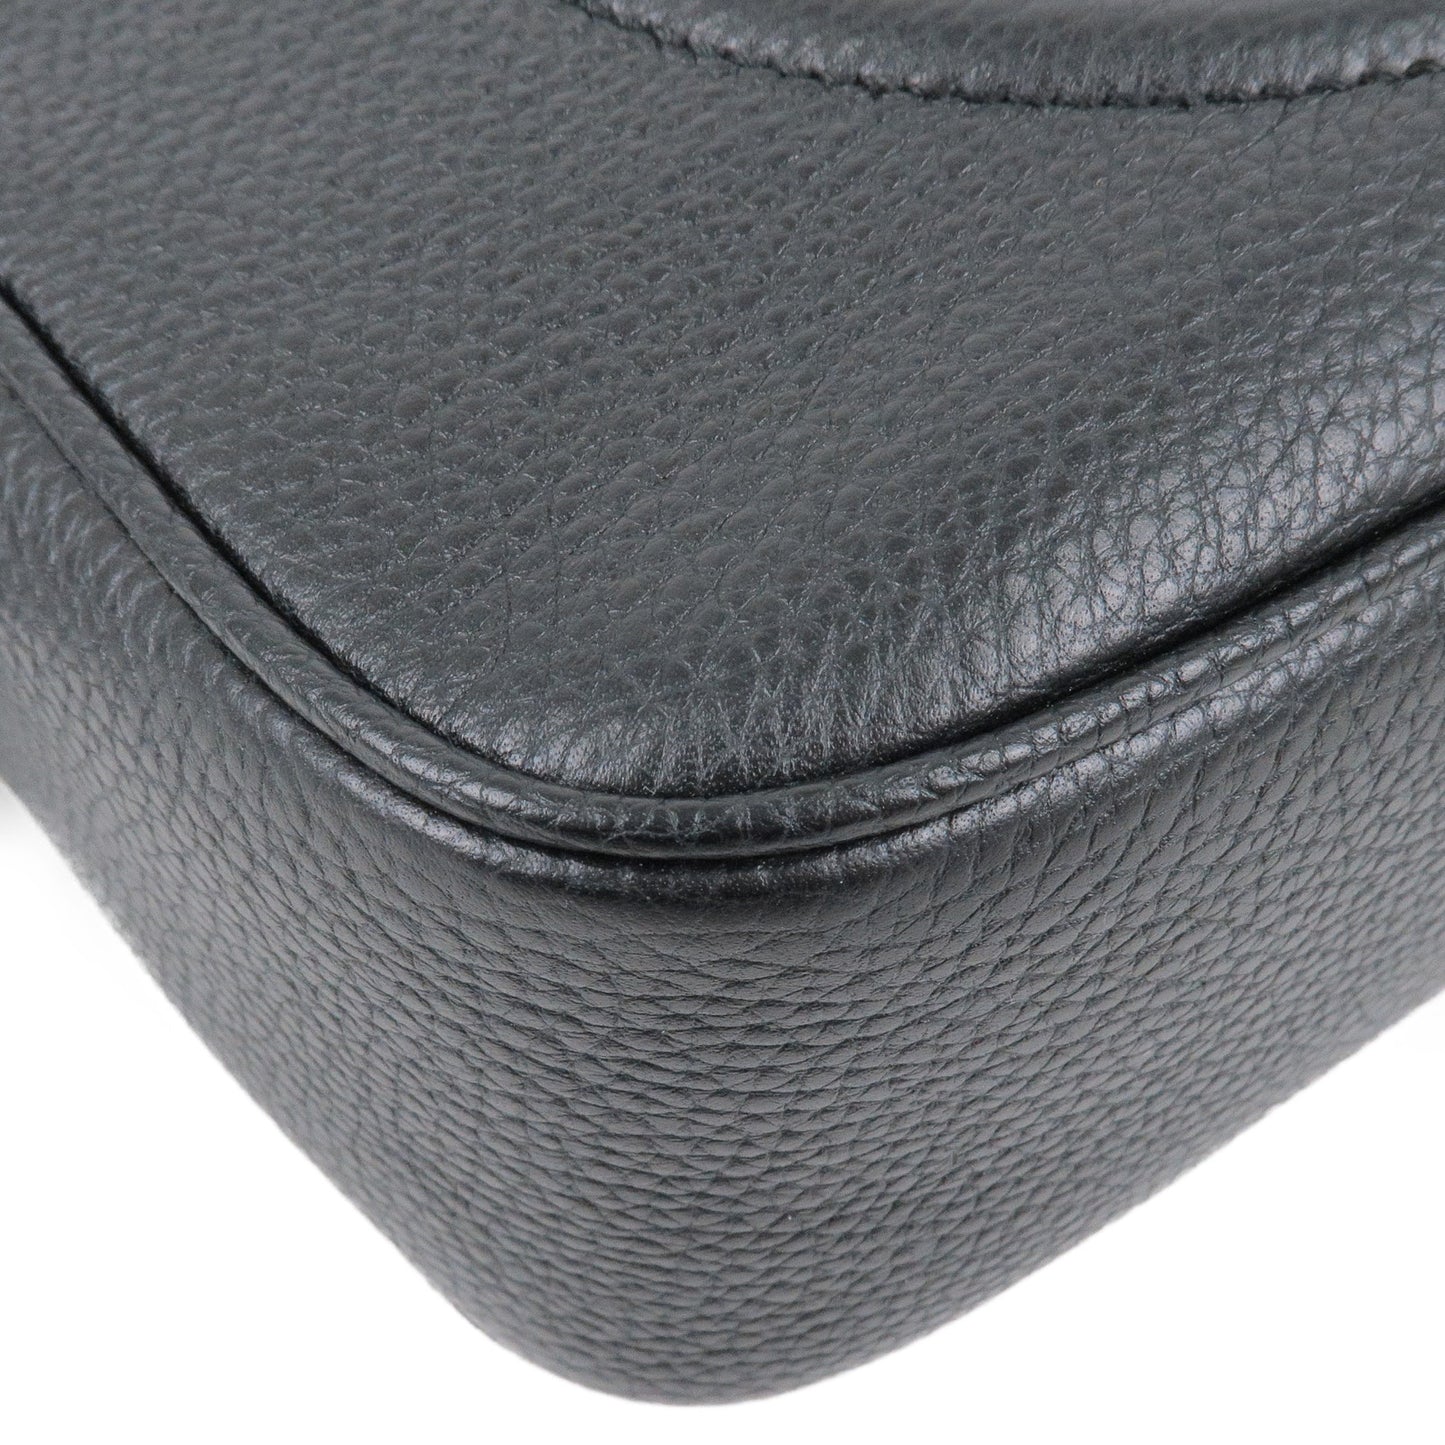 GUCCI SOHOi Small Disco Leather Shoulder Bag Black 308364